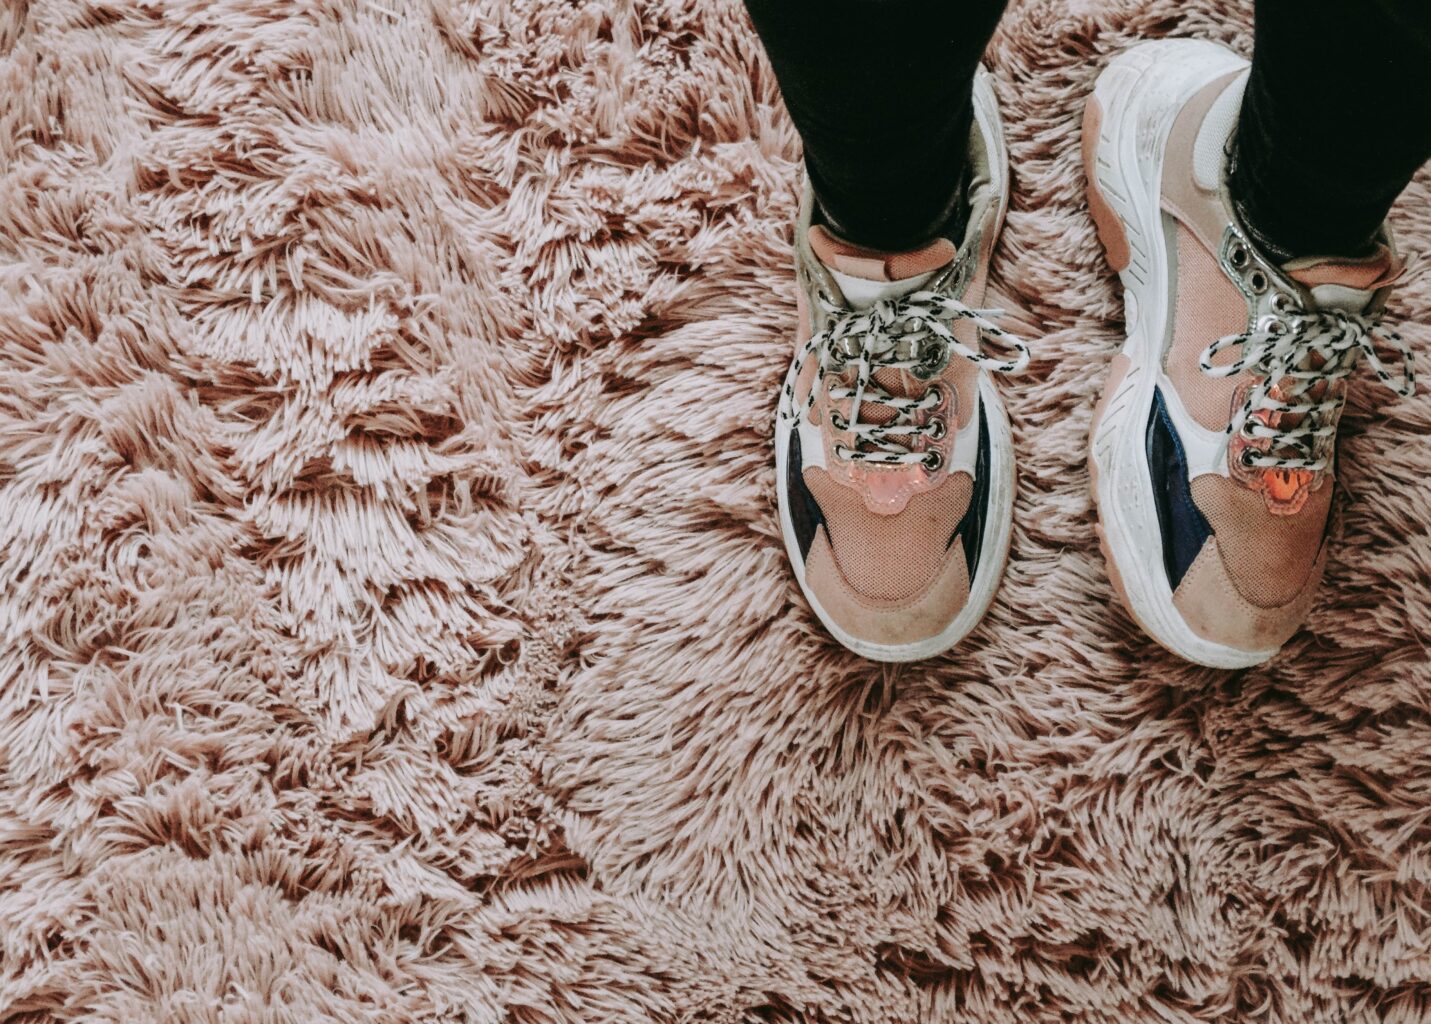 Shoes on shag carpet